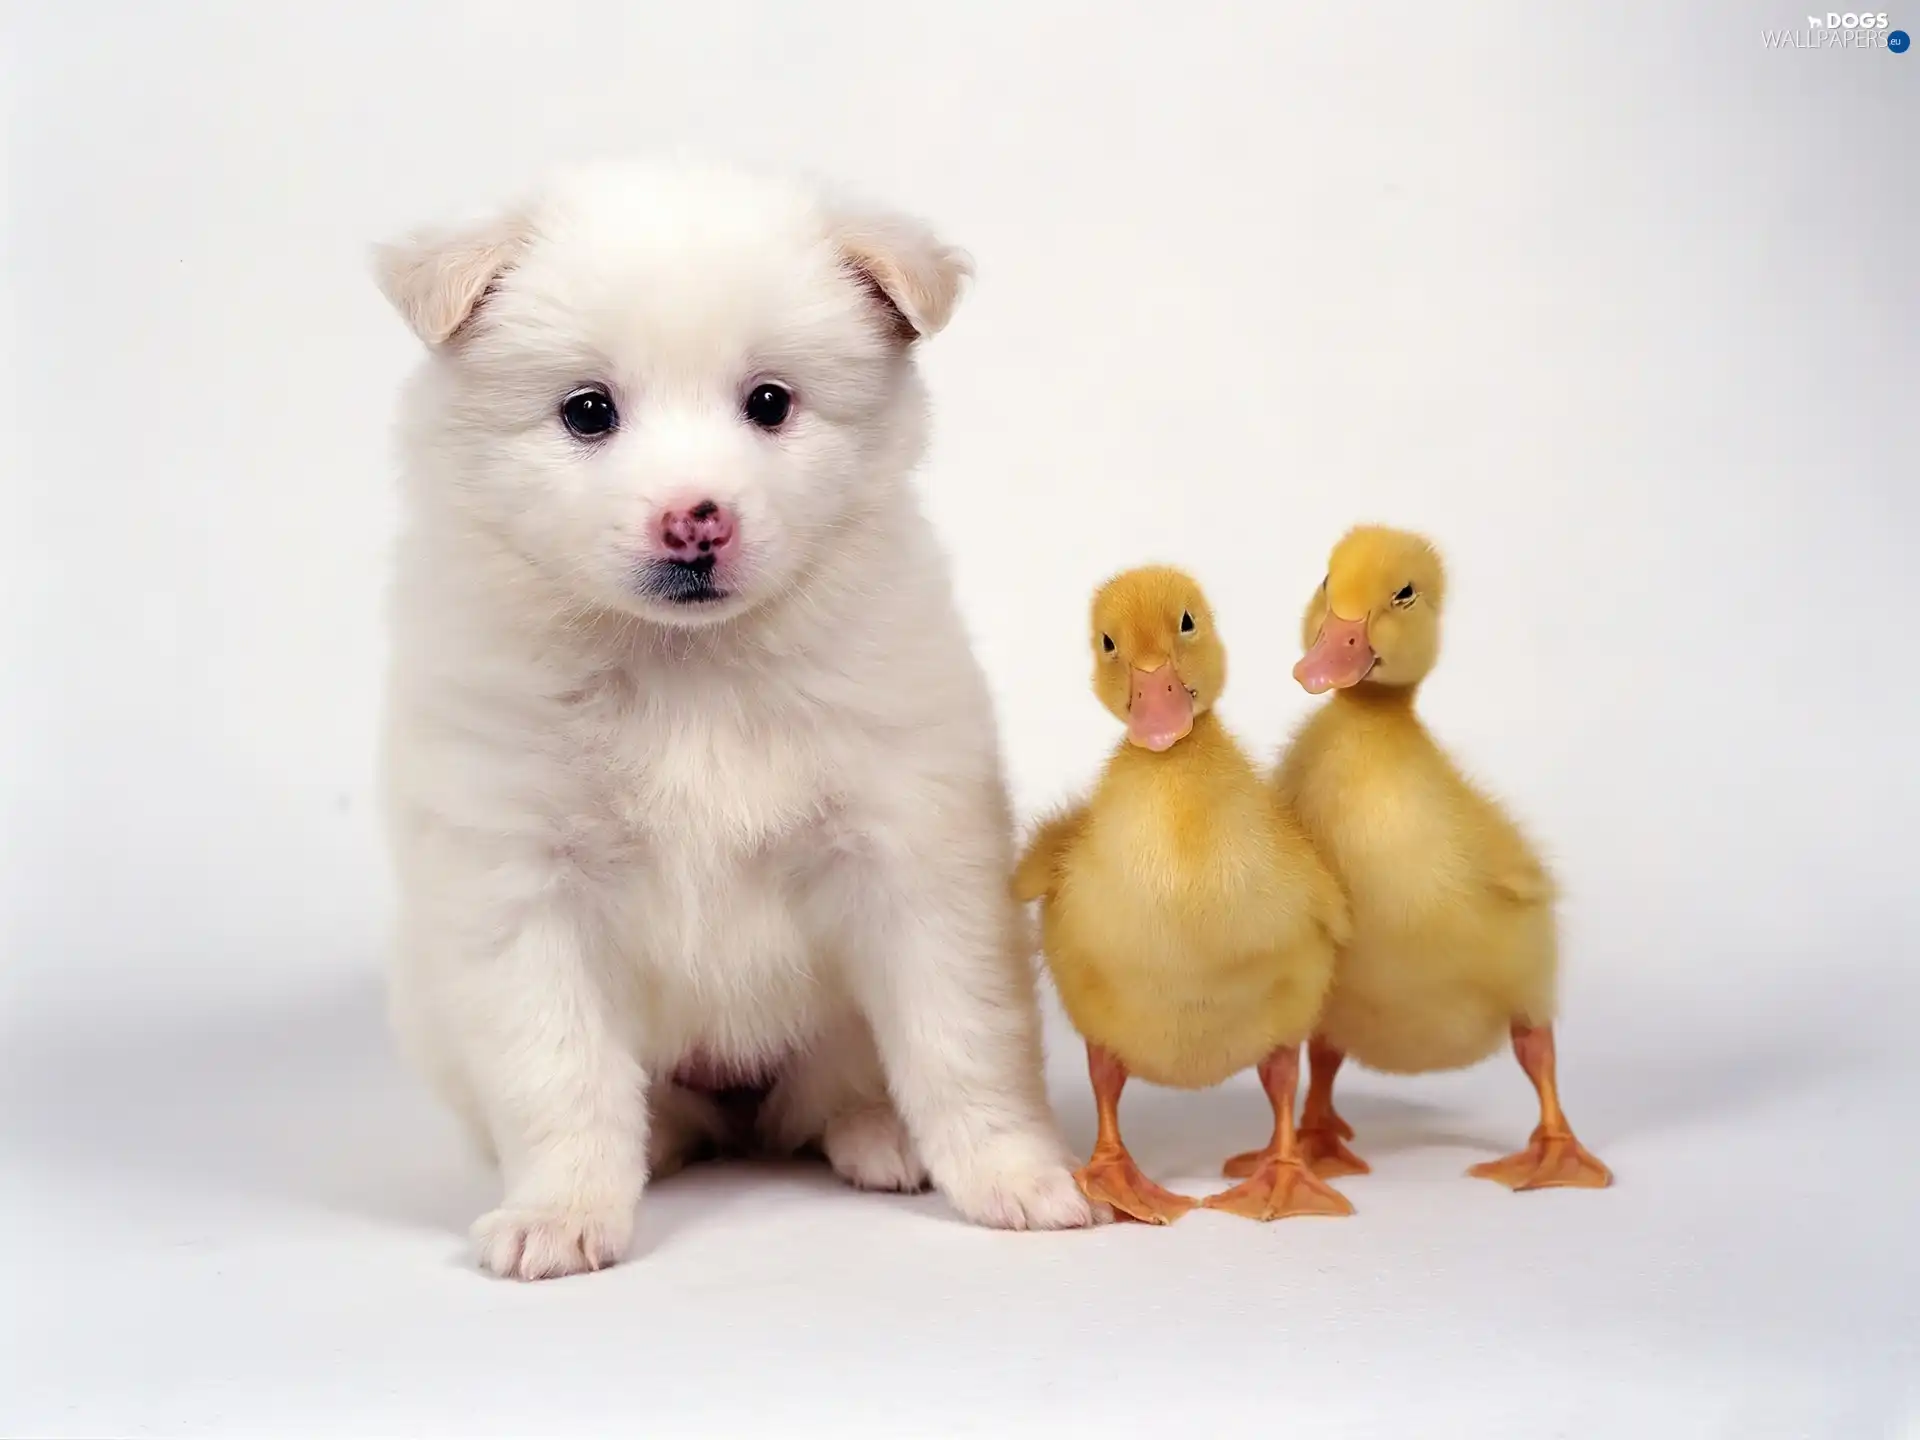 ducks, Two, White, doggie